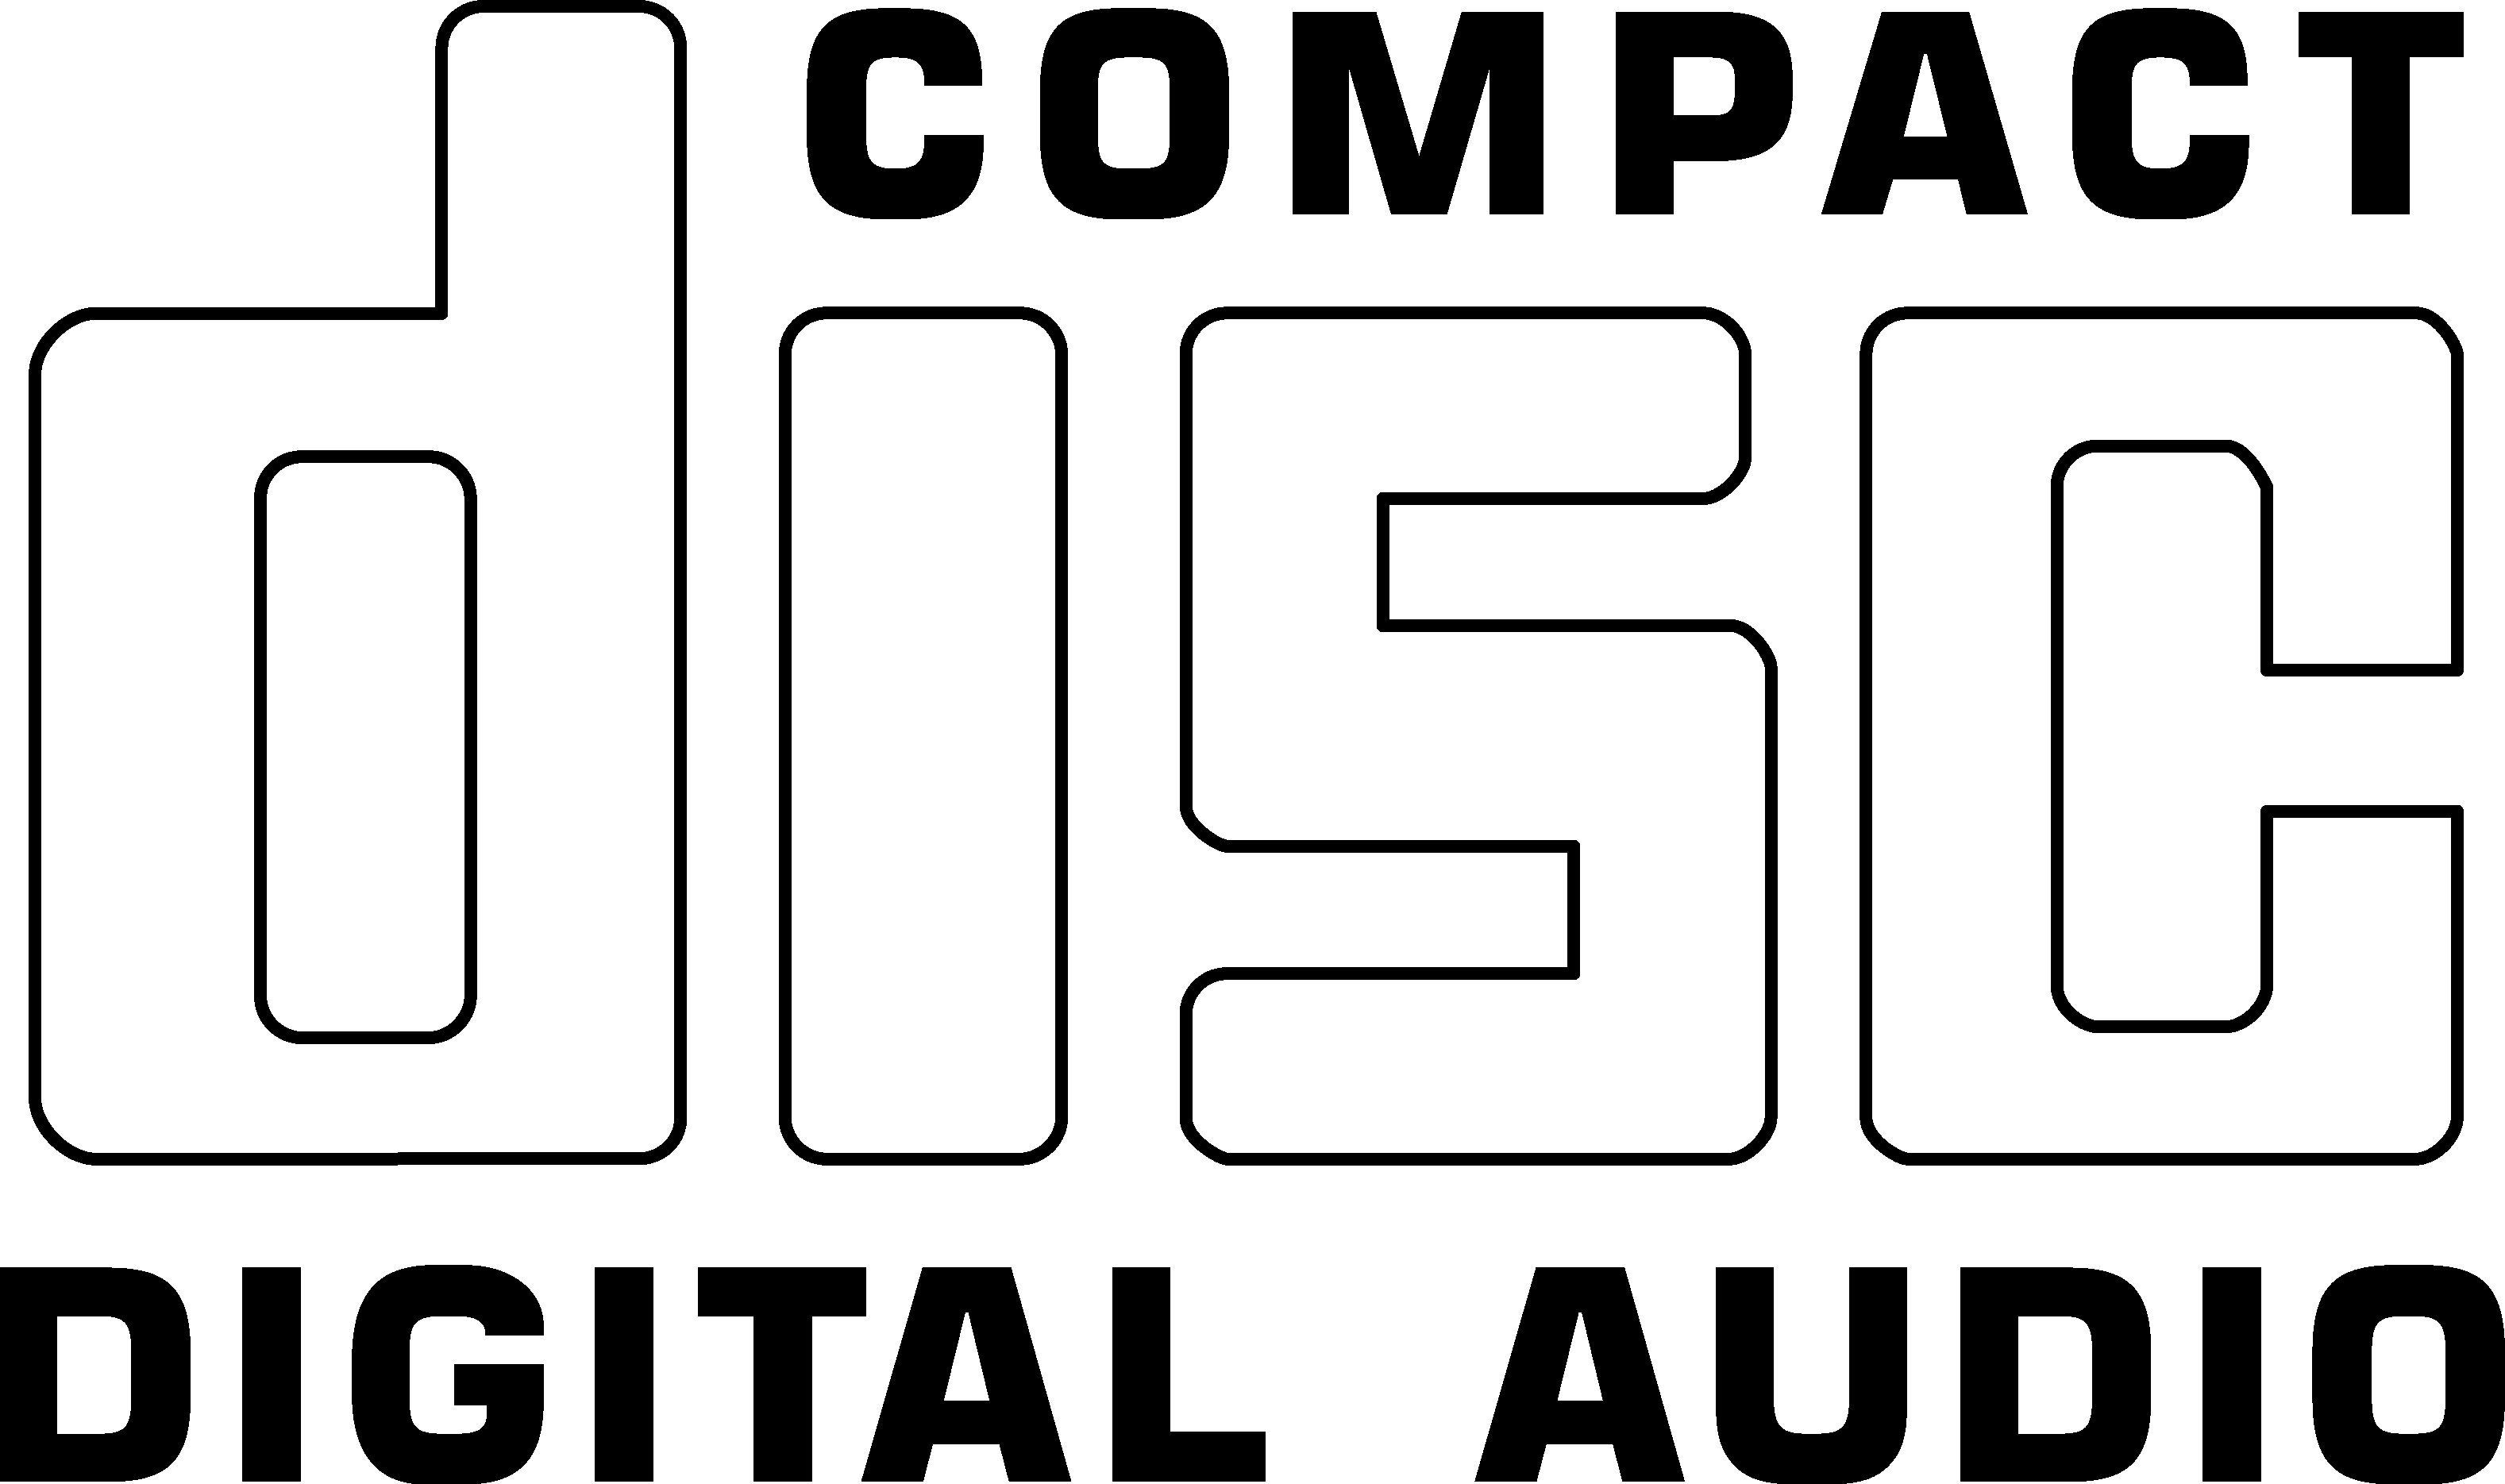 CD Audio Logo [Compact Disc Digital Audio] png